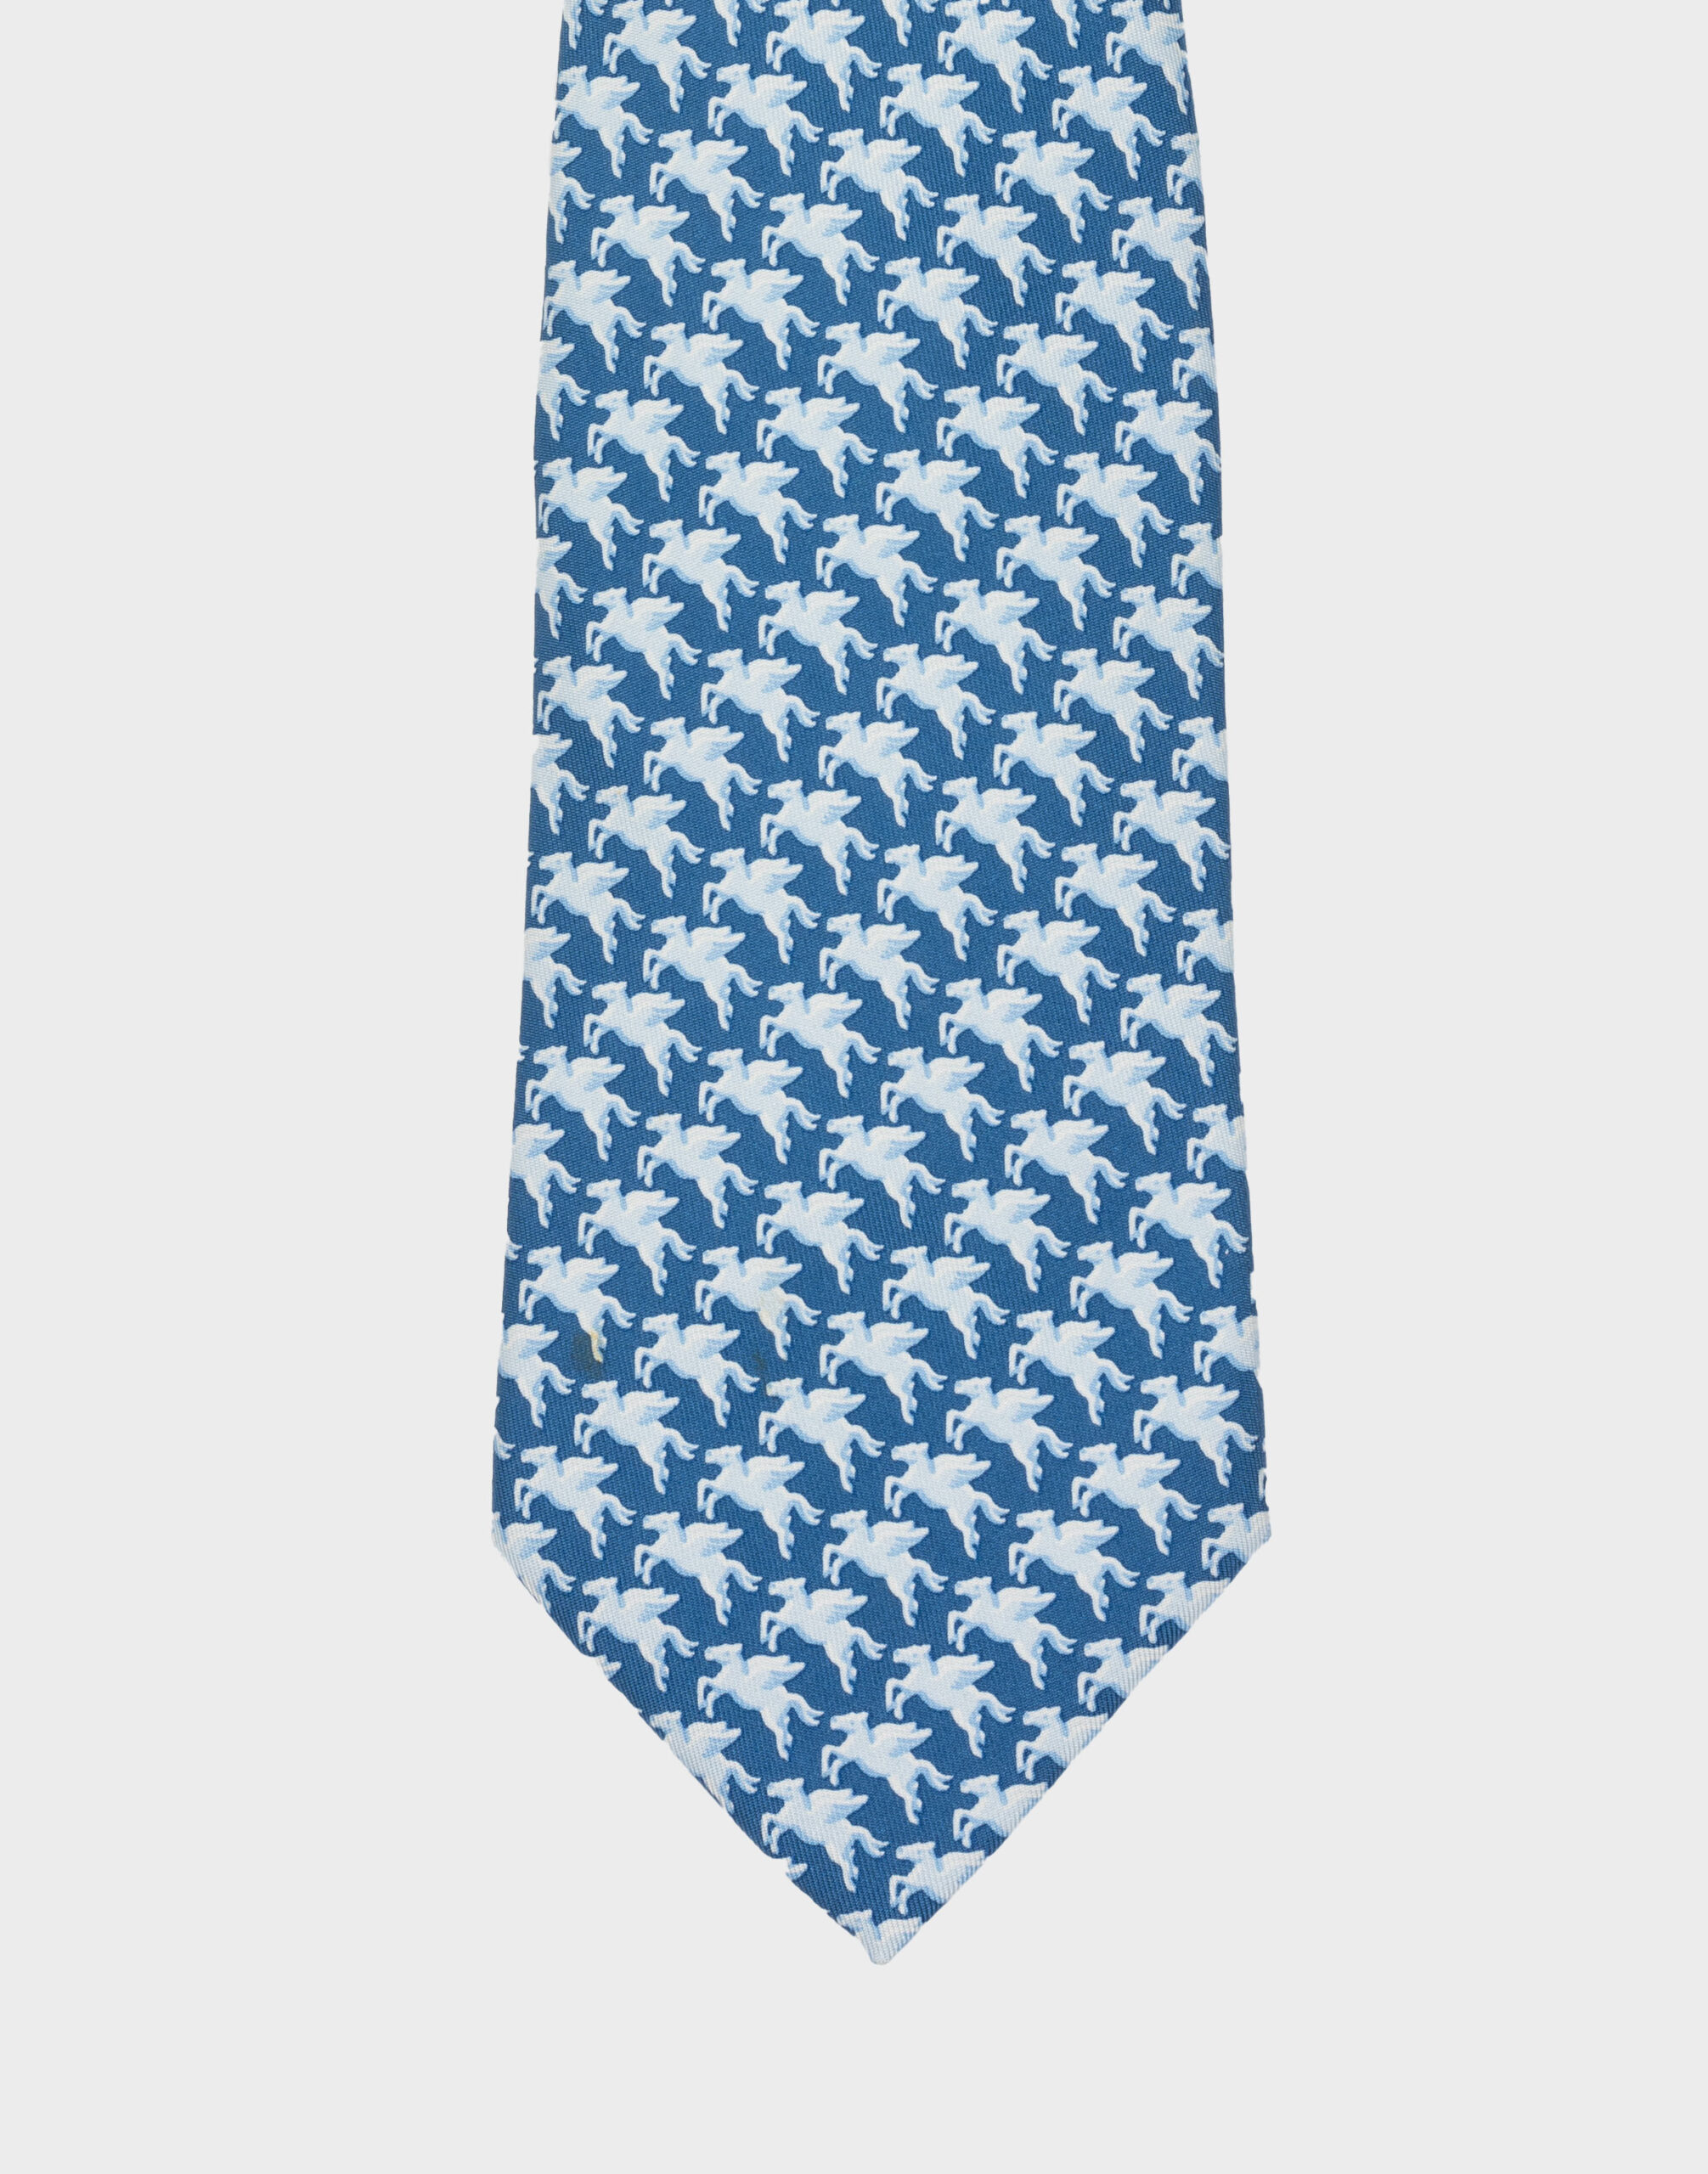 cravatta in seta da uomo azzurra con stampa pegasus